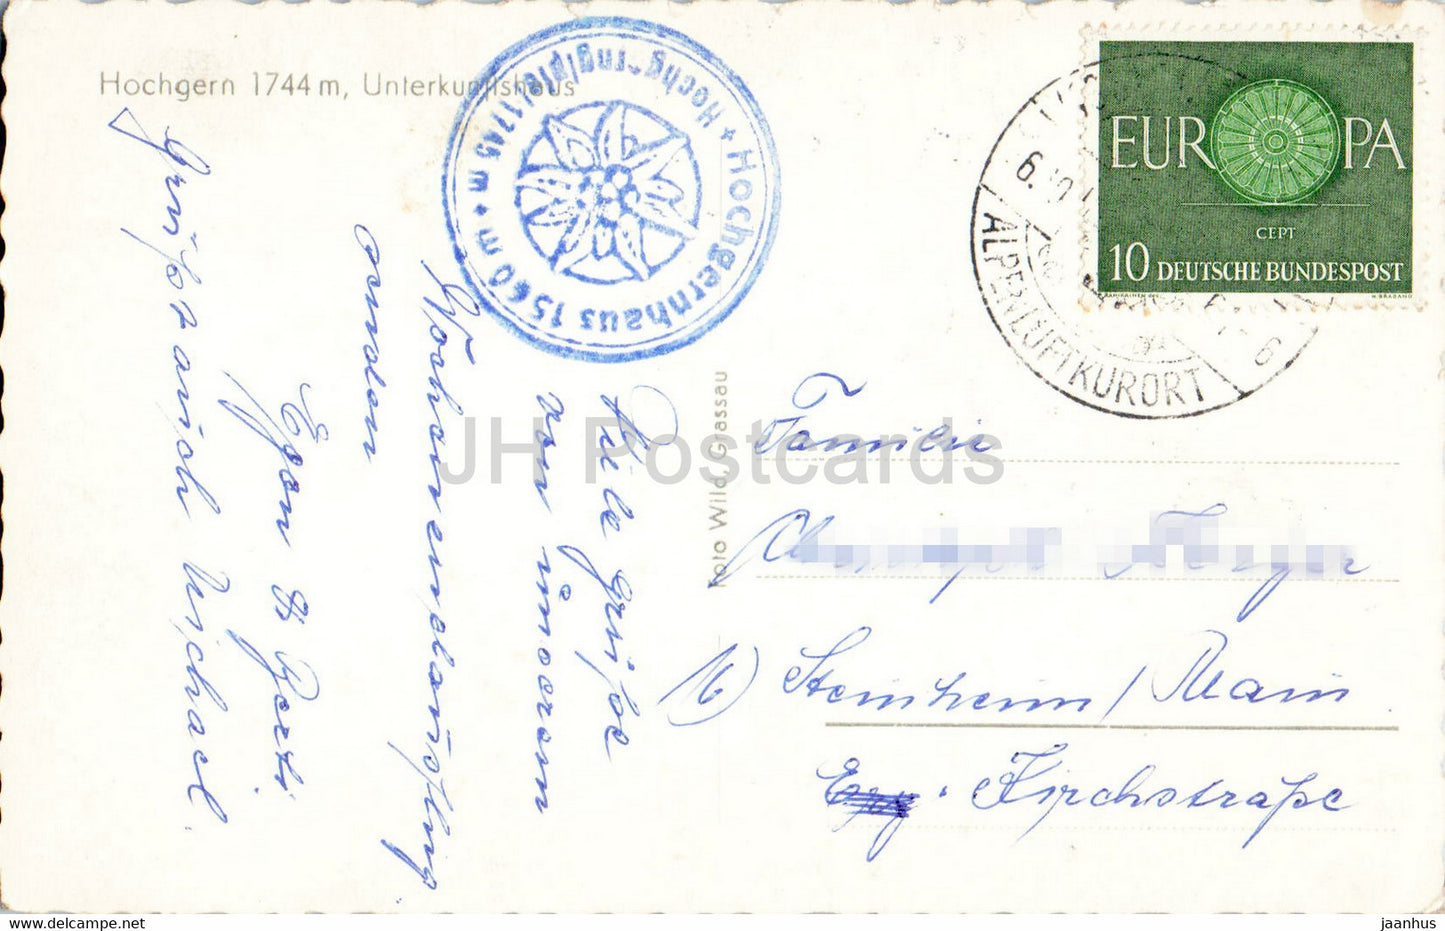 Hochgern 1744 m - Unterkunfthaus - old postcard - Germany - used